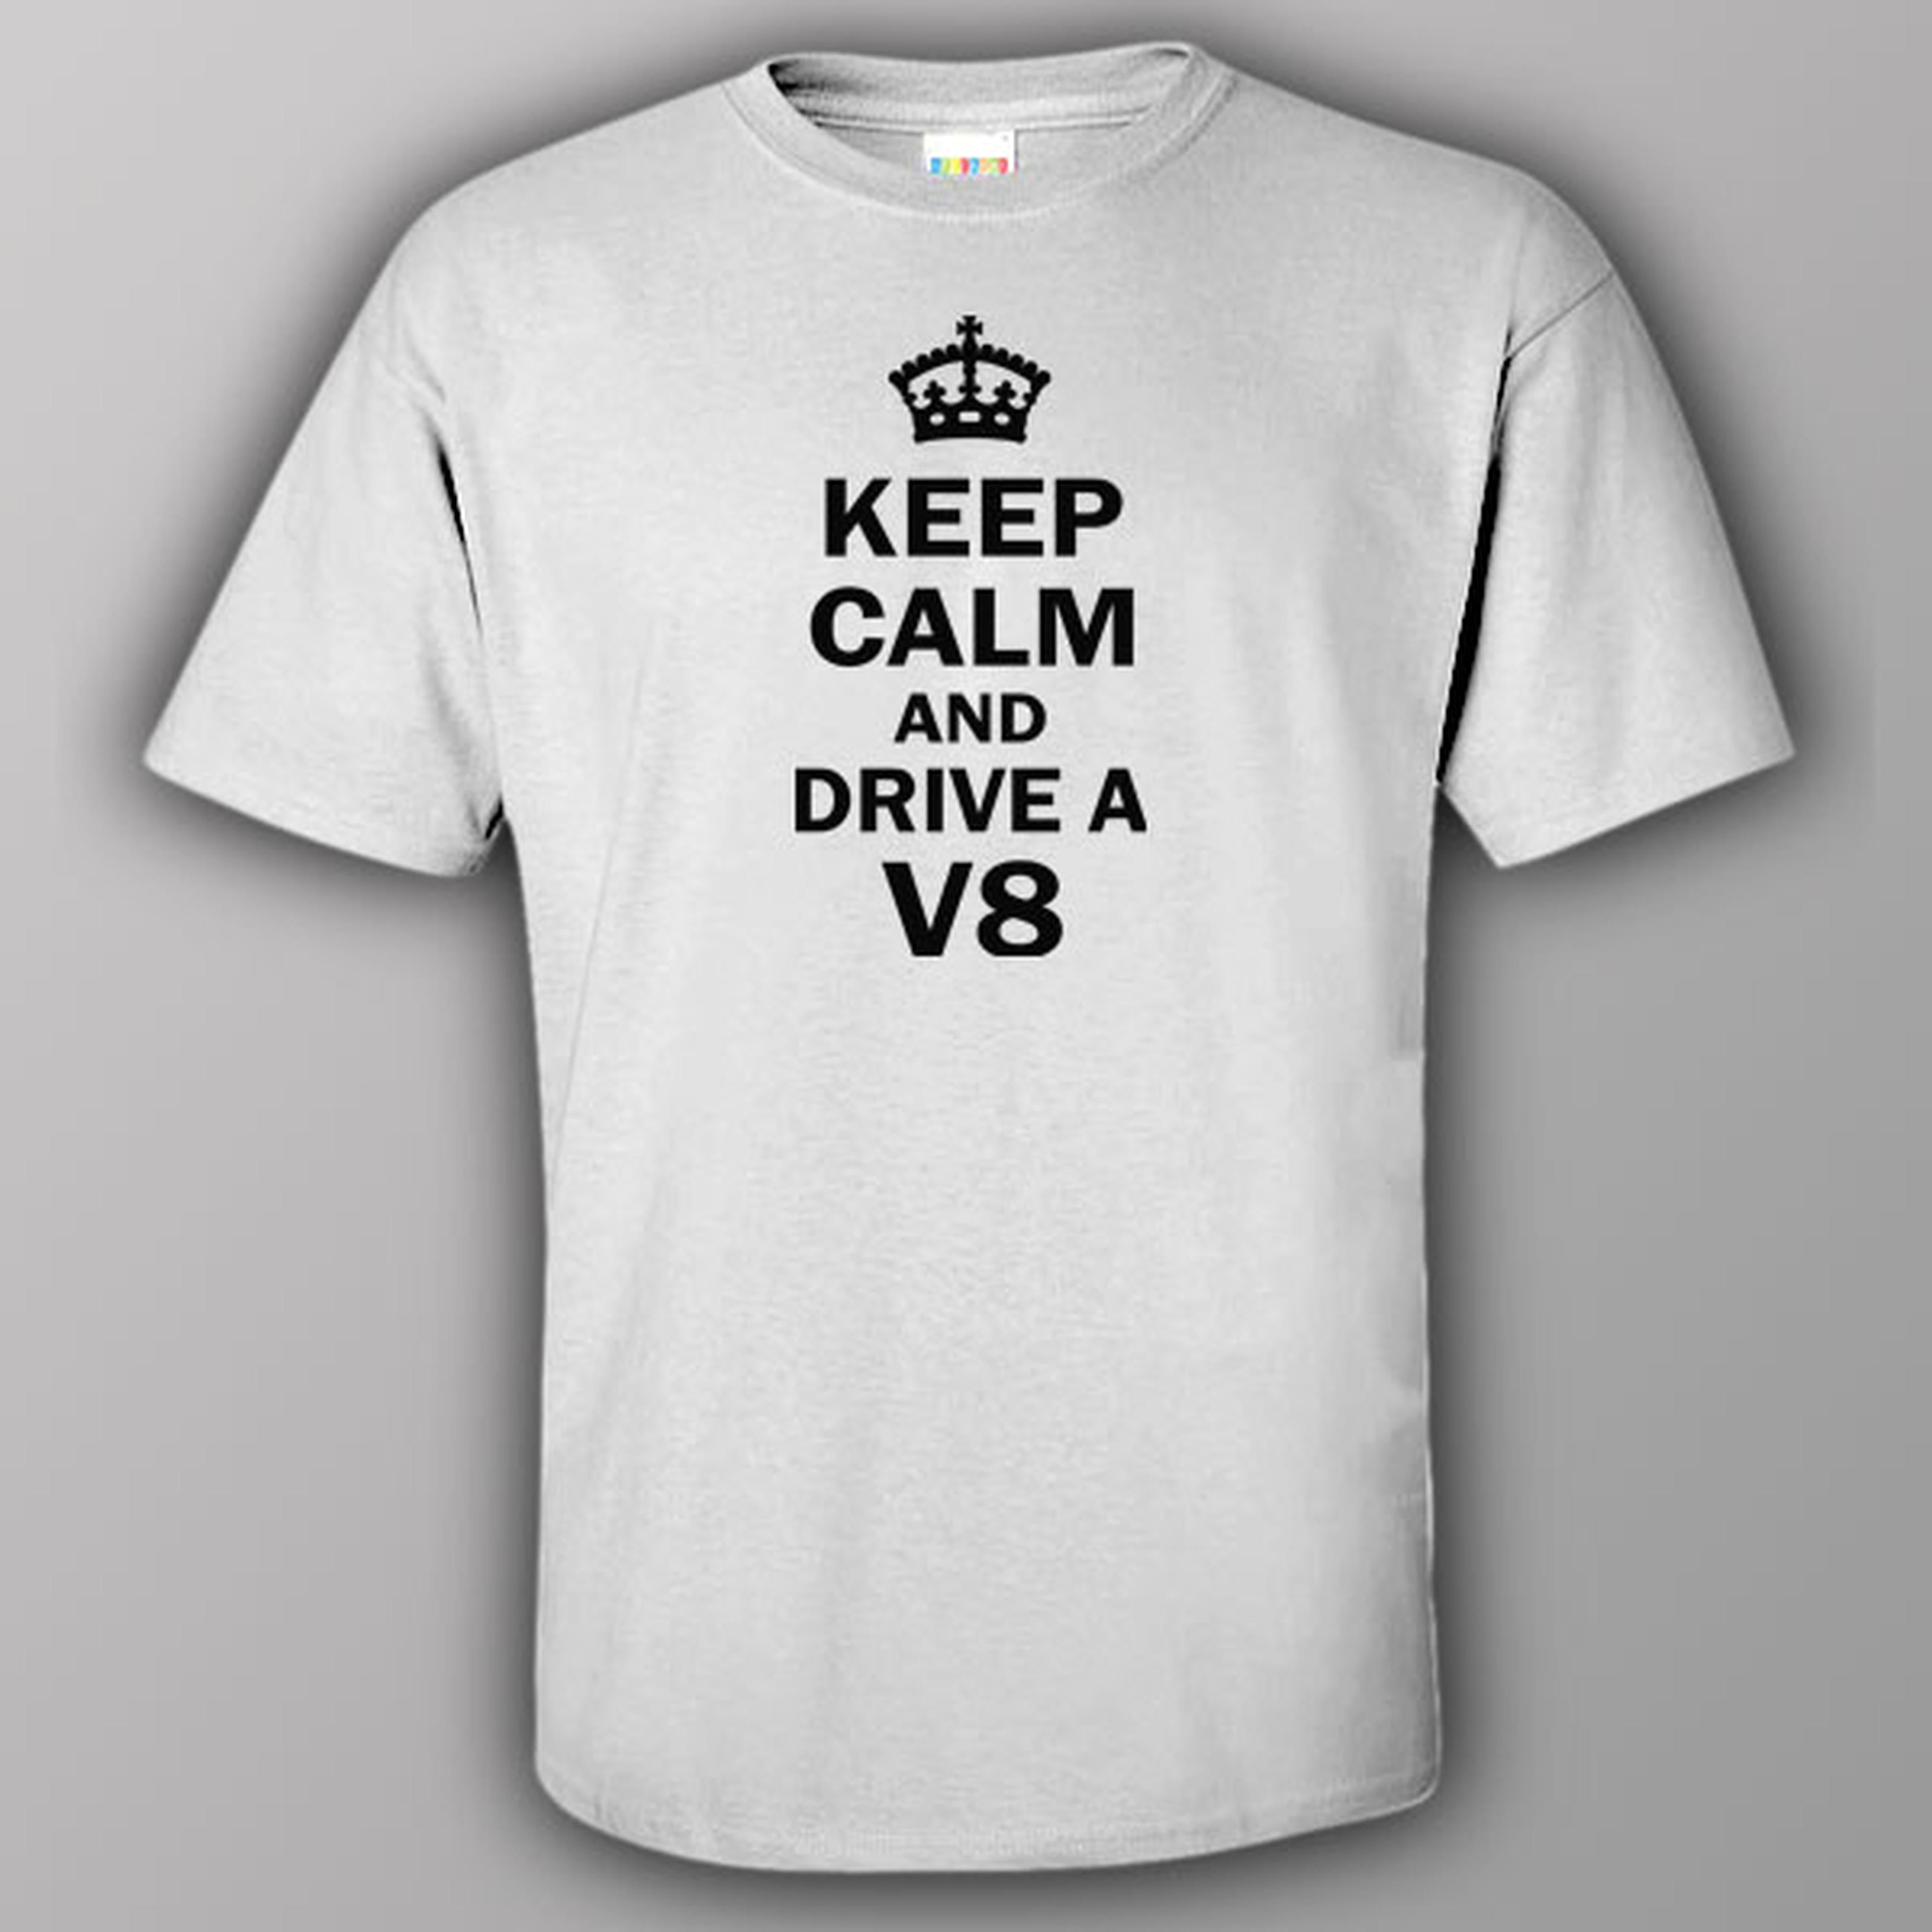 Keep calm and drive a V8 - T-shirt